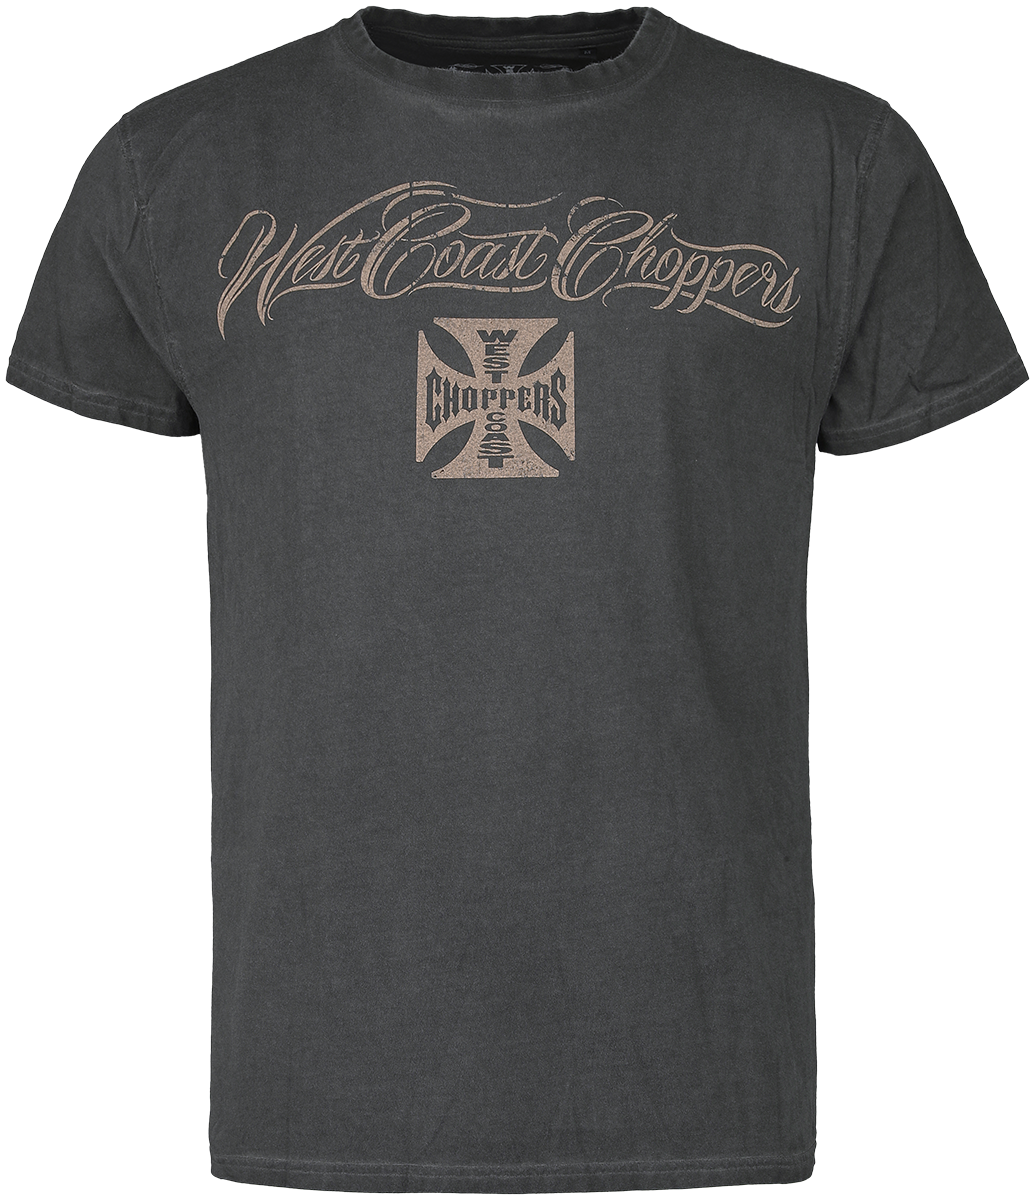 West Coast Choppers - Eagle Crest - T-Shirt - anthrazit